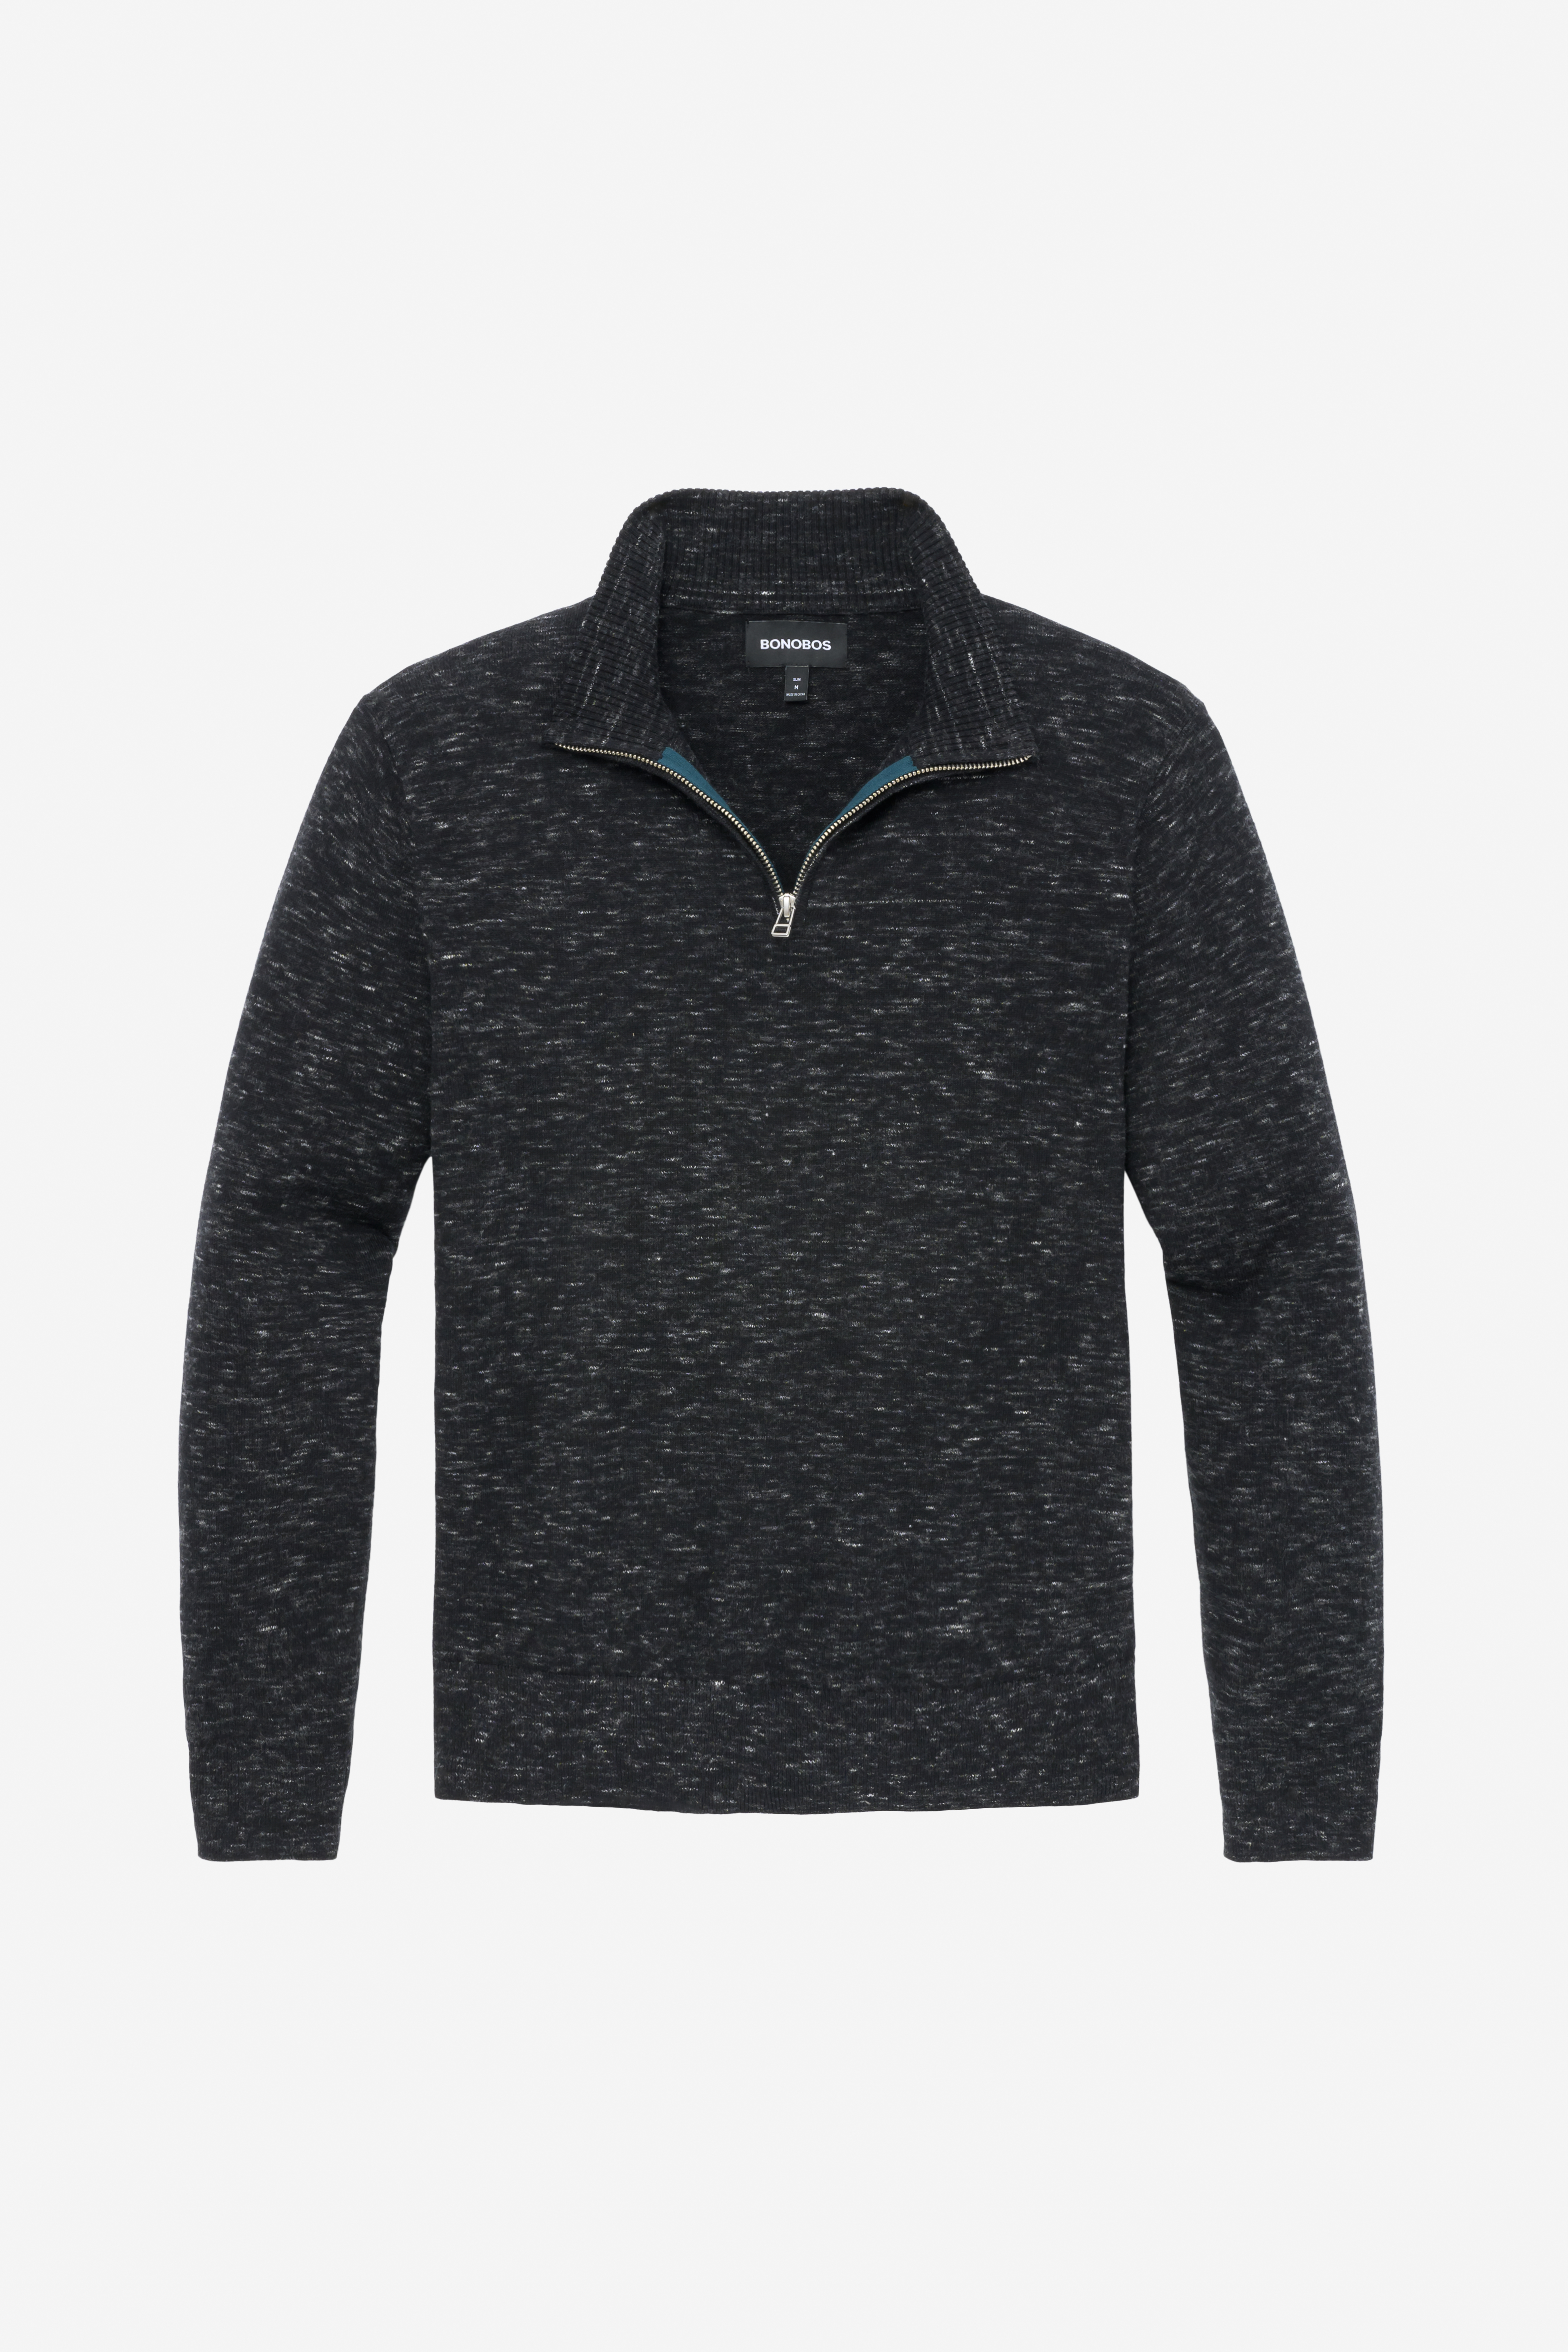 Washable Cotton Cashmere Half-Zip Sweater | Bonobos